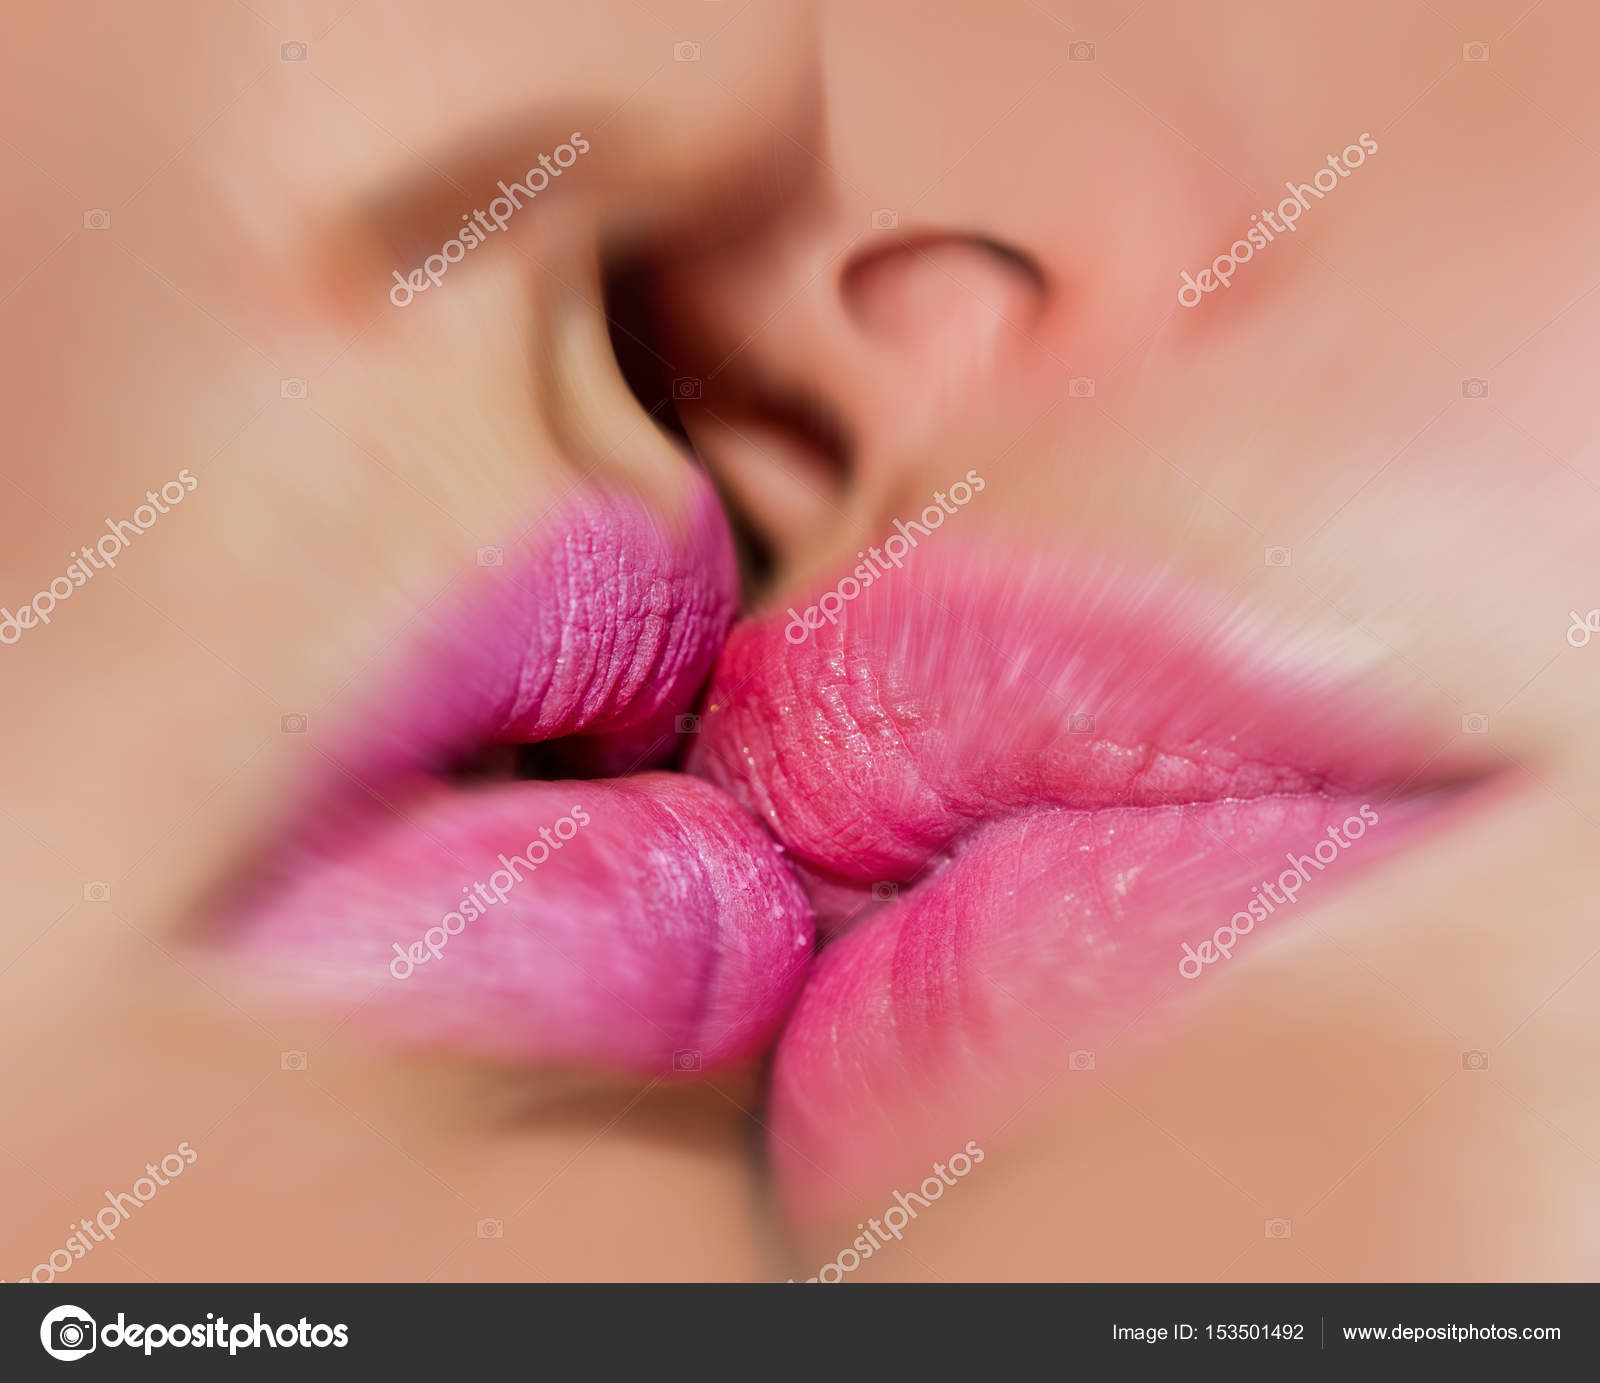 Lipstick Lesbian Kissing 68